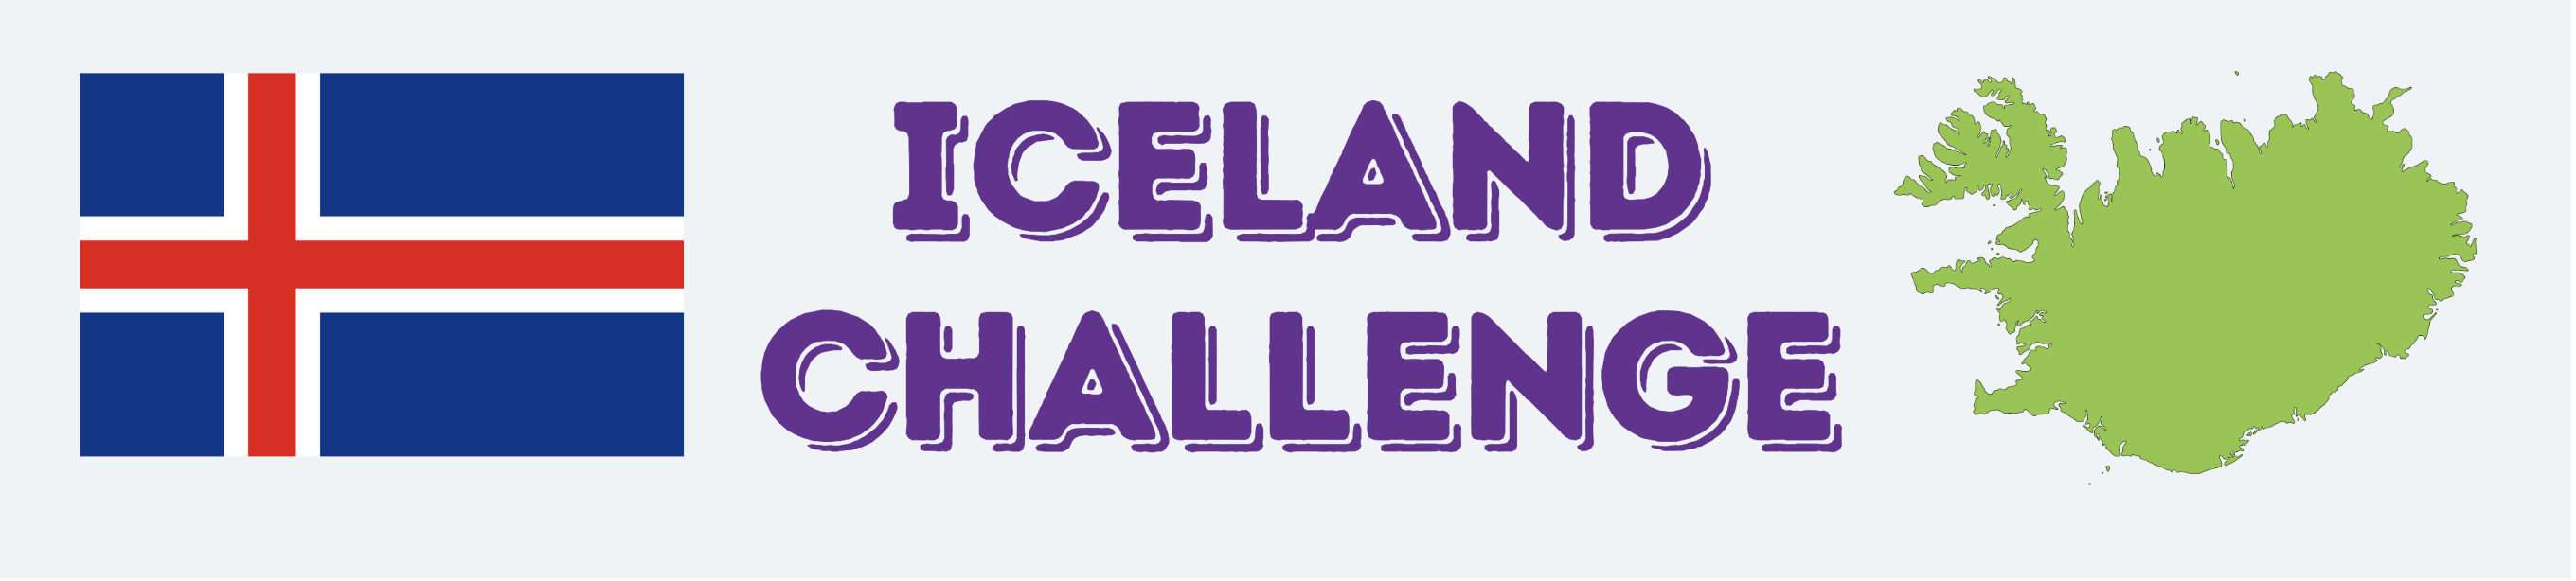 iceland-challenge